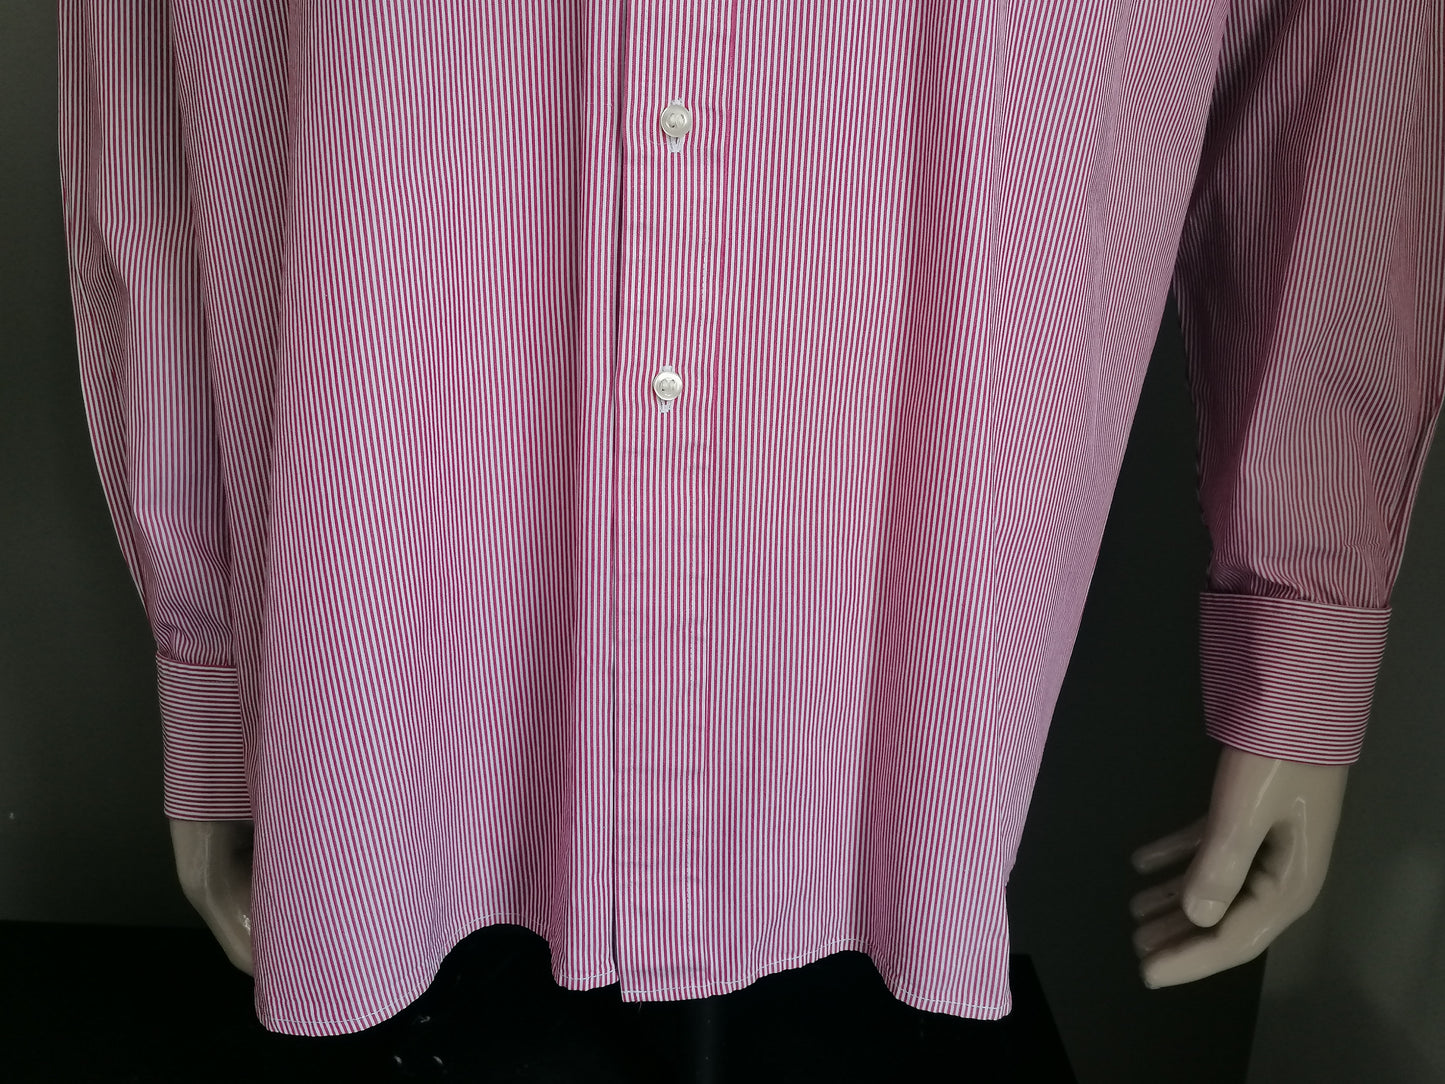 Lipman & Sons overhemd. Rood Wit gestreept. Maat 45 / XXL / 2XL. Type Manchetknoop. "Two Fold Yarn".